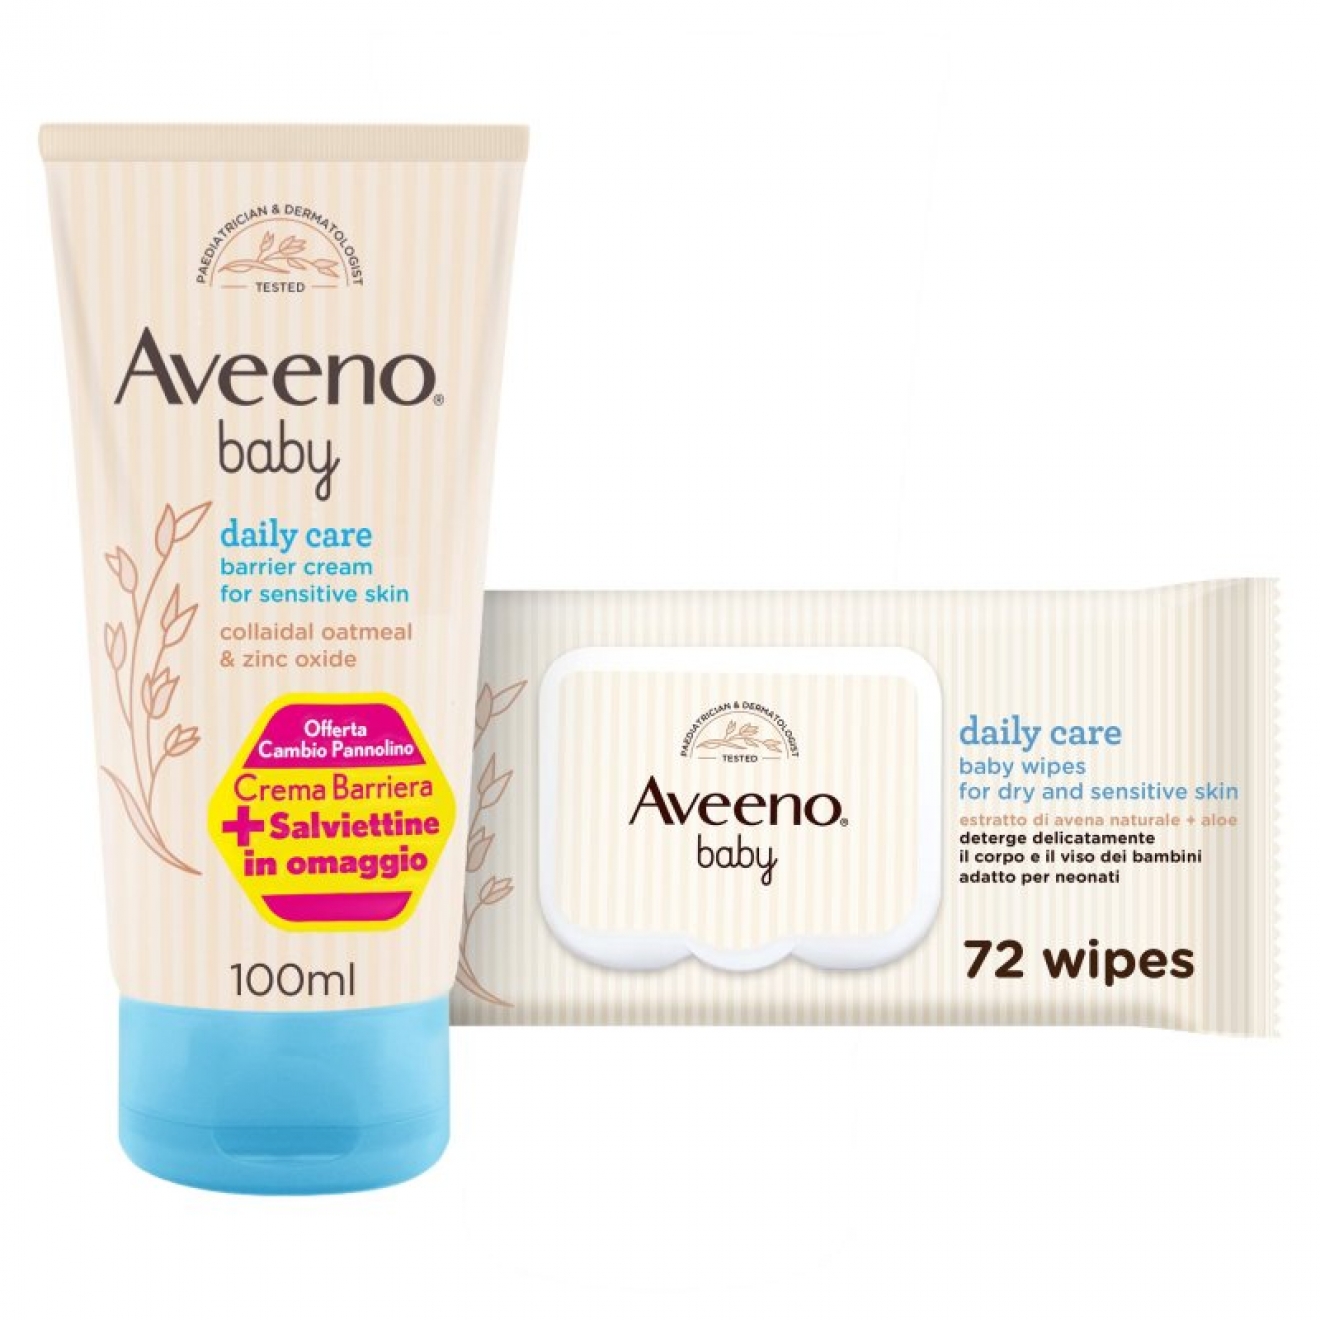 Набор для ежедневного ухода за малышами -  Aveeno, Baby Barrier Cream100 ml + Baby Wipes